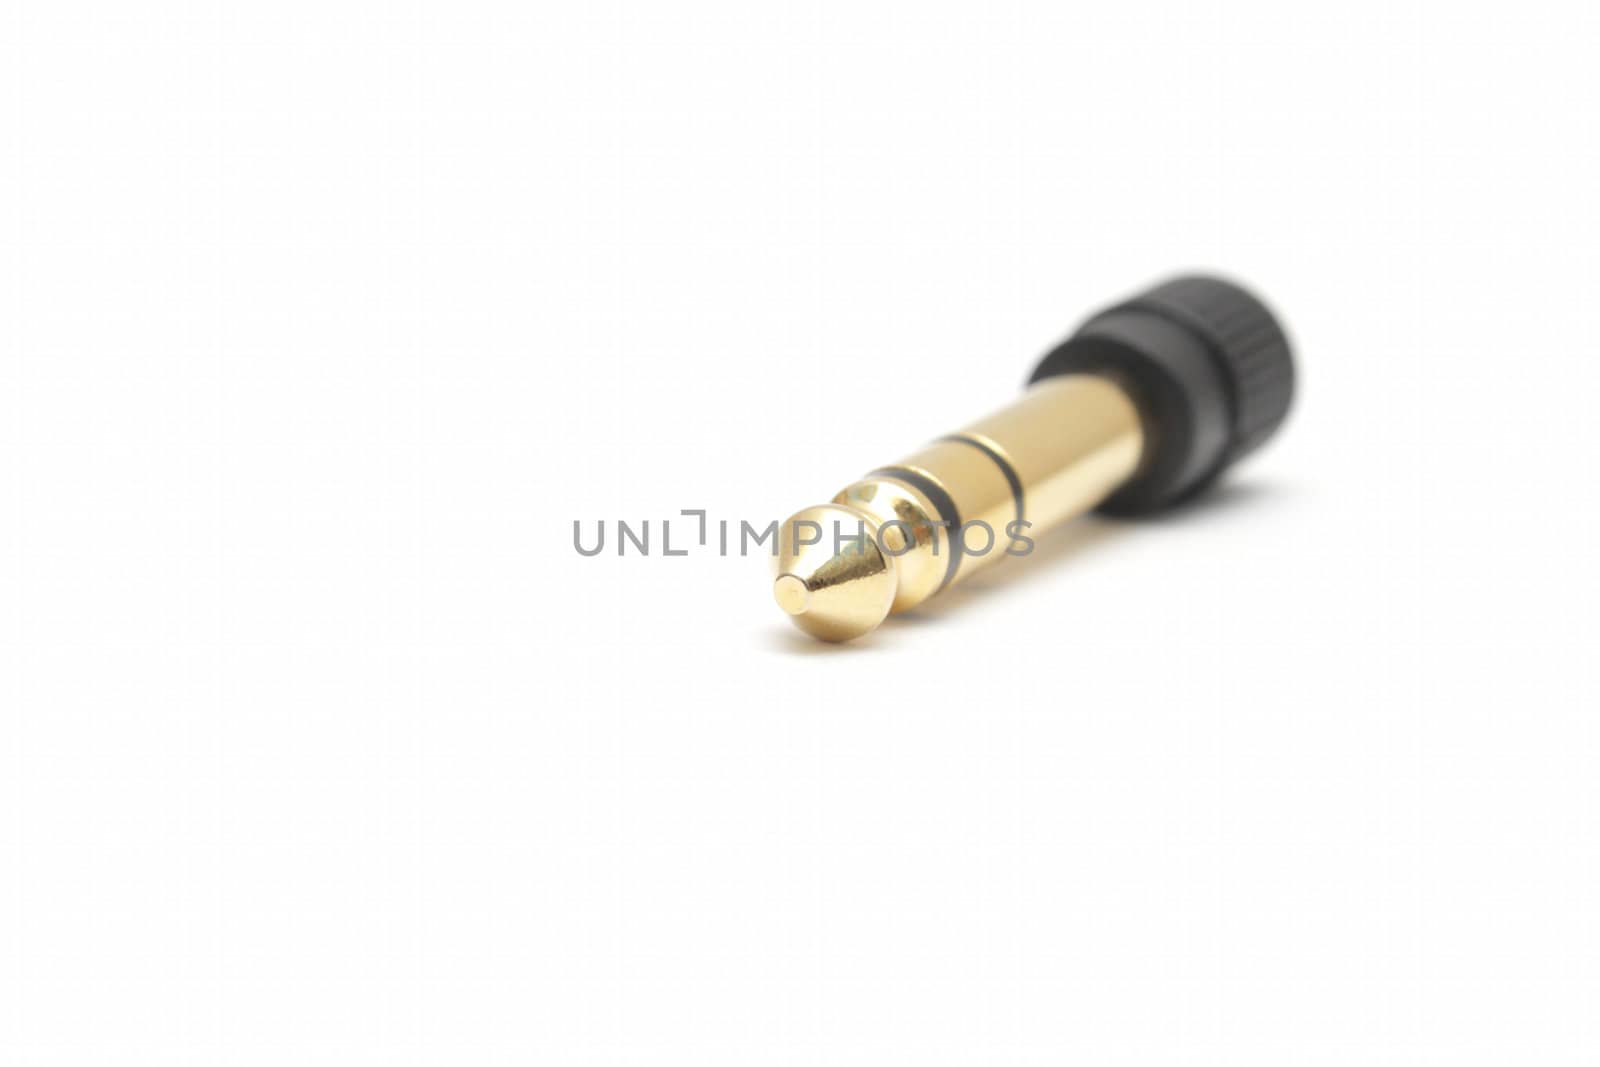 Golden headphone plug adapter isolated on white background